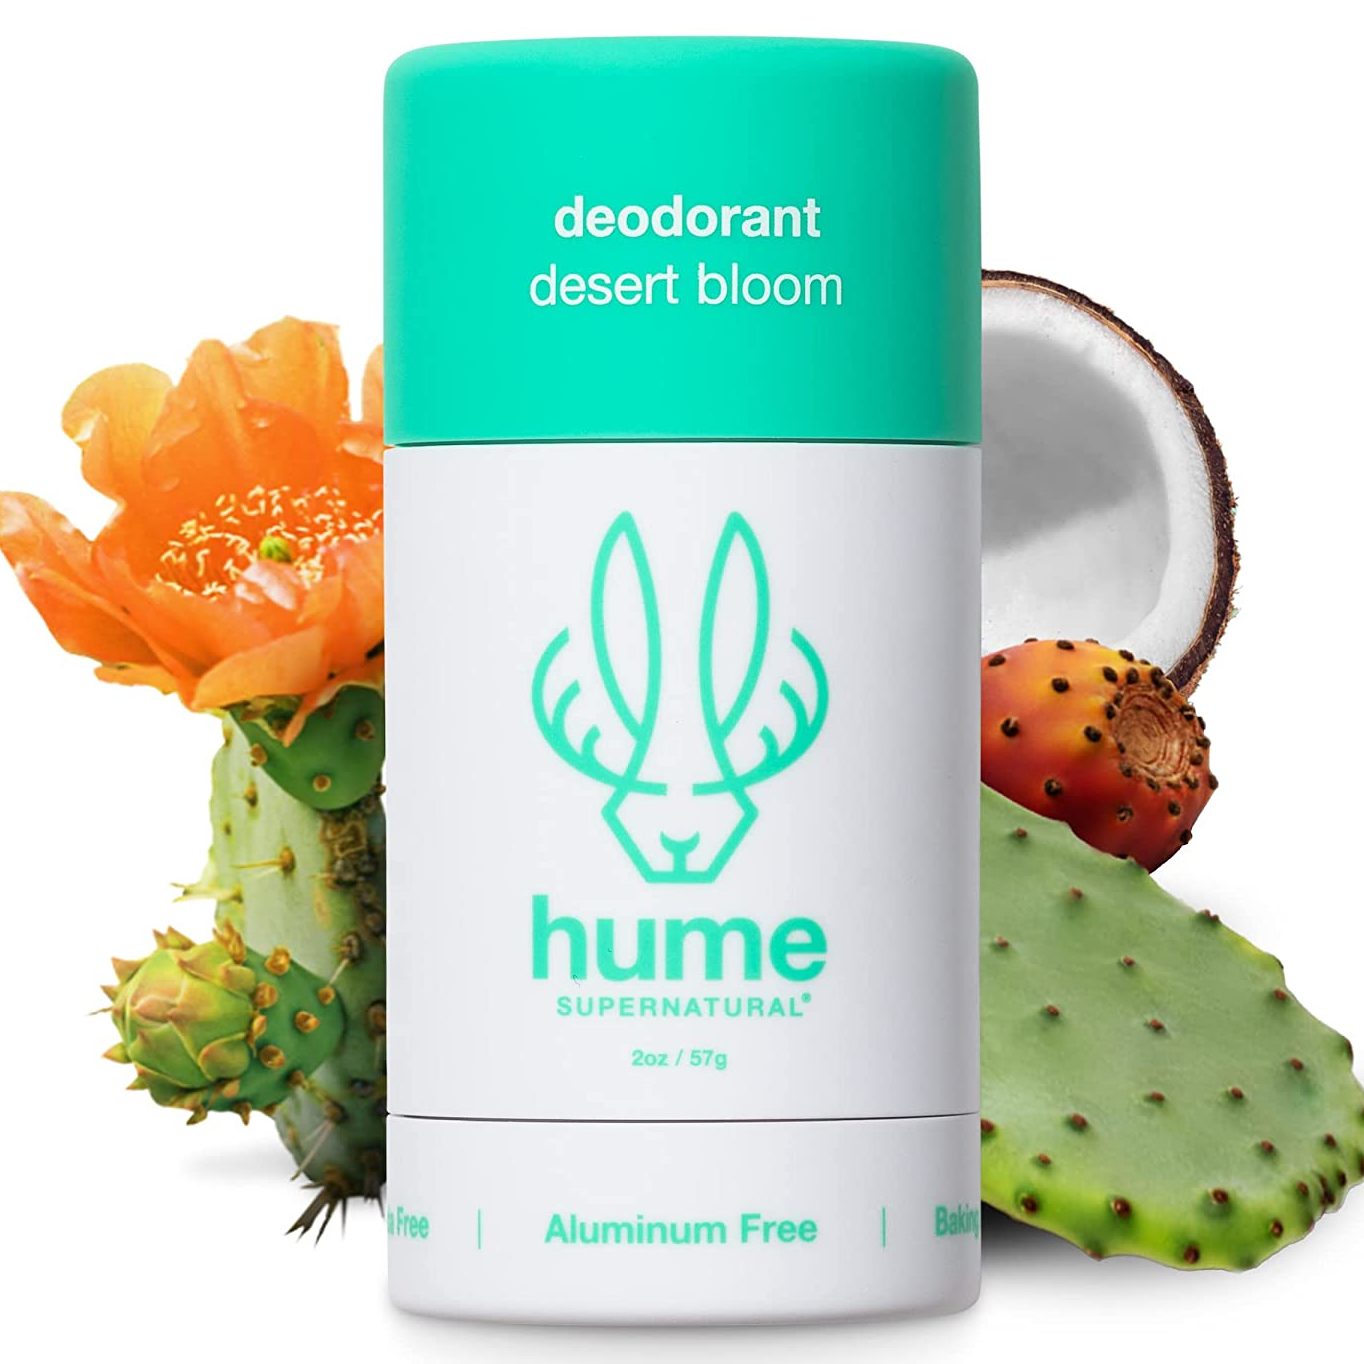 Hume Supernatural Natural Deodorant Aluminum Free for Women & Men, Natural Ingredients, Probiotic, Plant Based, Baking Soda Free, Aloe, & Cactus Flower, Anti Sweat, Stain & Odor – Desert Bloom, 1 Pack 